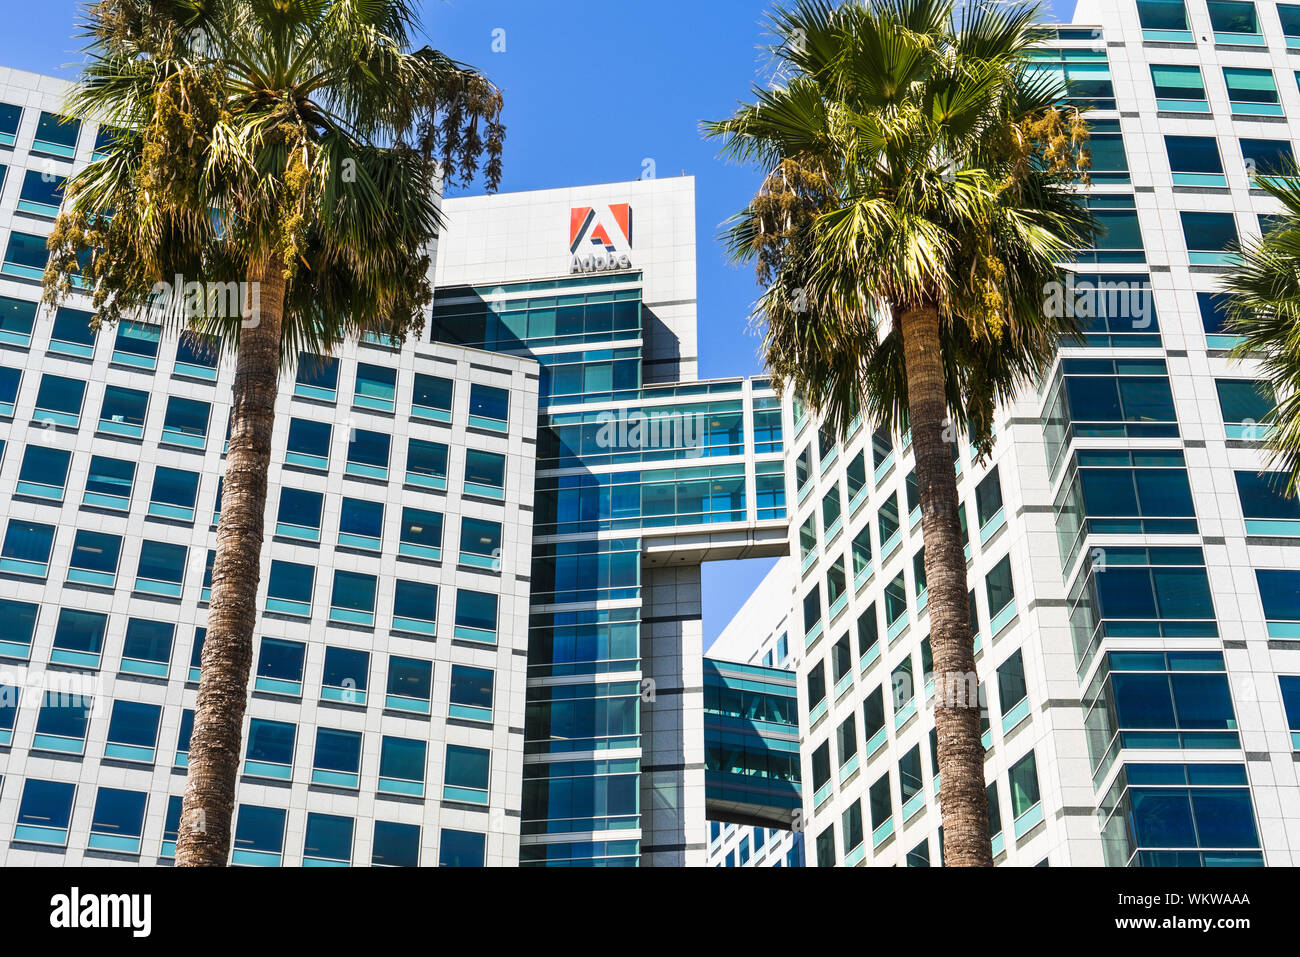 September 3, 2019 San Jose / CA / USA - Adobe Inc. corporate headquarters in downtown San Jose, south San Francisco bay area, Silicon Valley Stock Photo